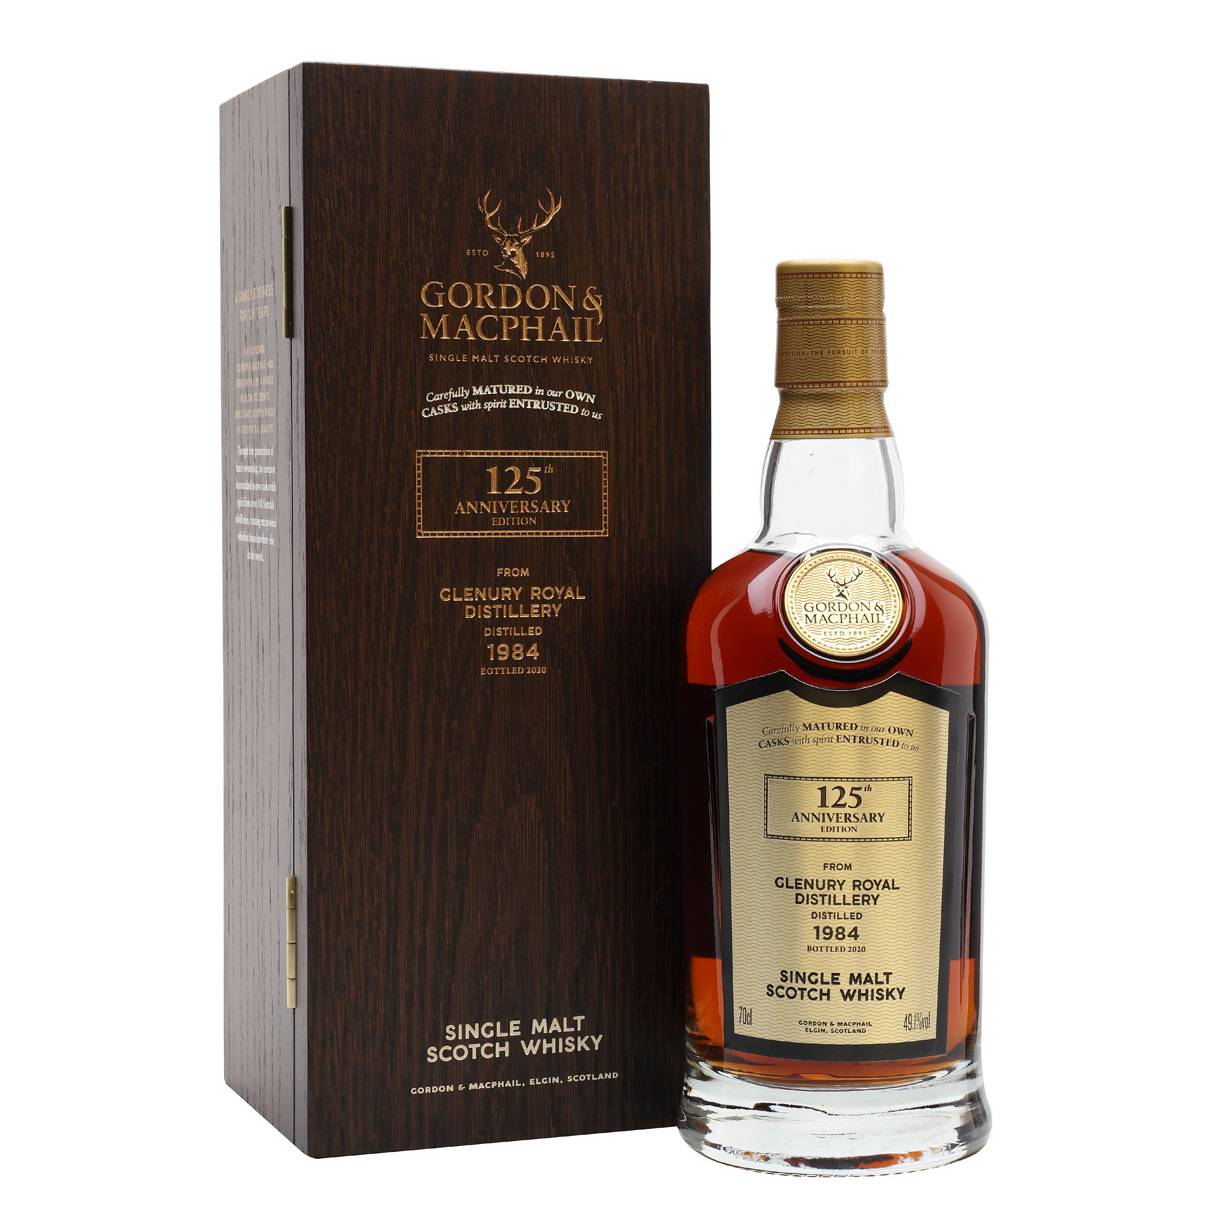 Gordon & MacPhail The Last Cask Series Glenury Royal 1984 35 Year Old Single Malt Scotch Whisky (125th Anniversary Edition)